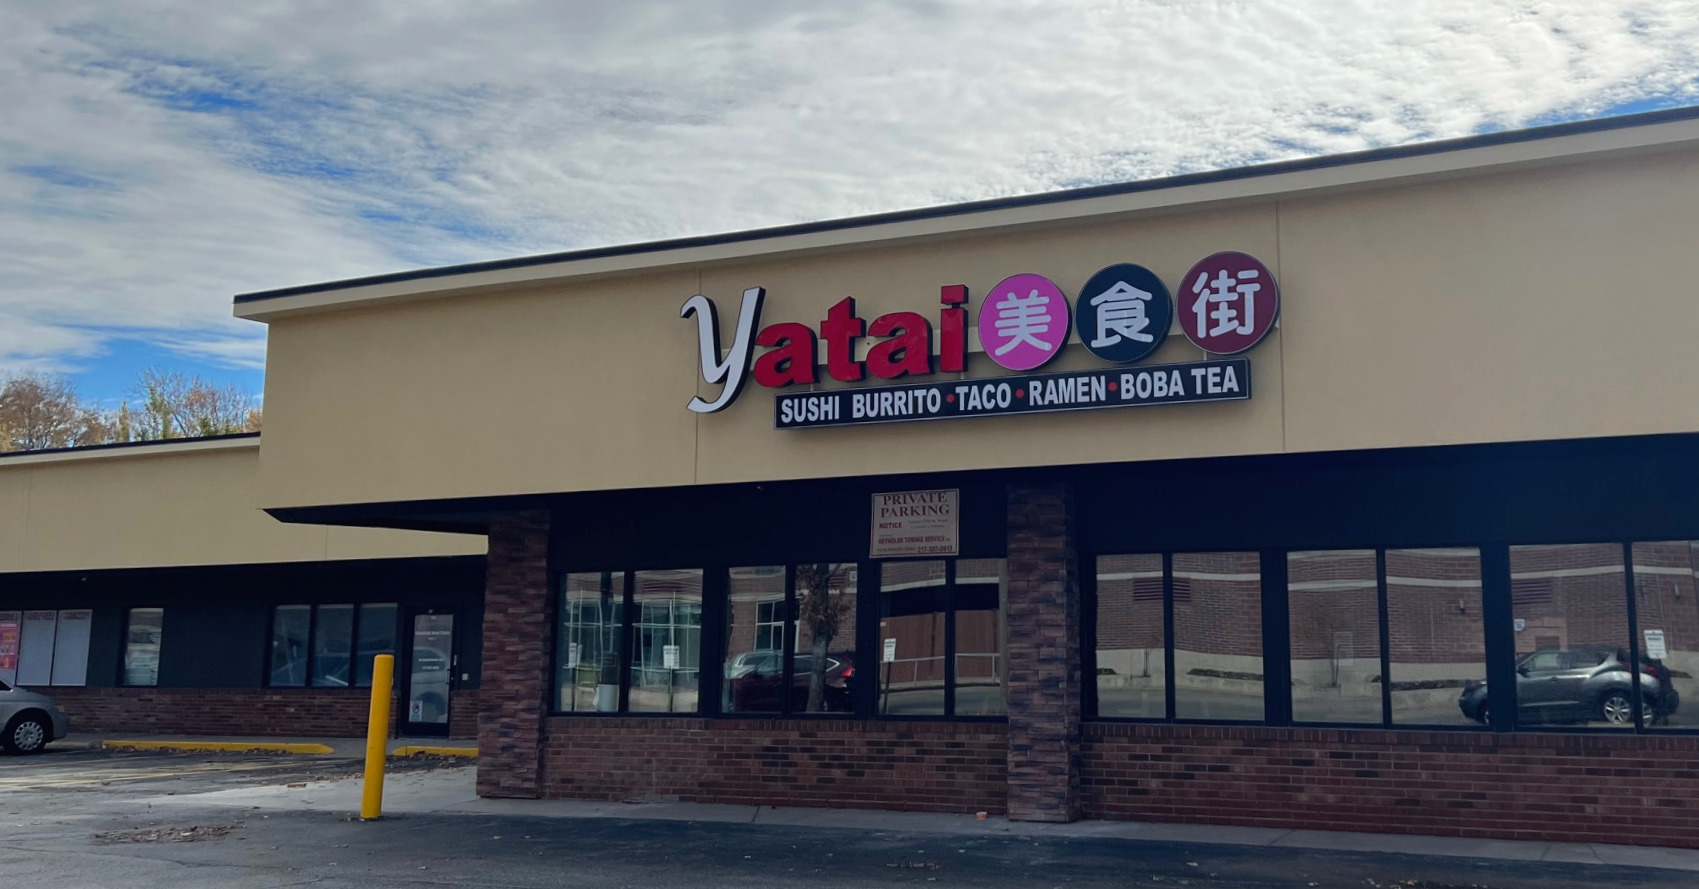 Yatai restaurant opening this week on University Avenue